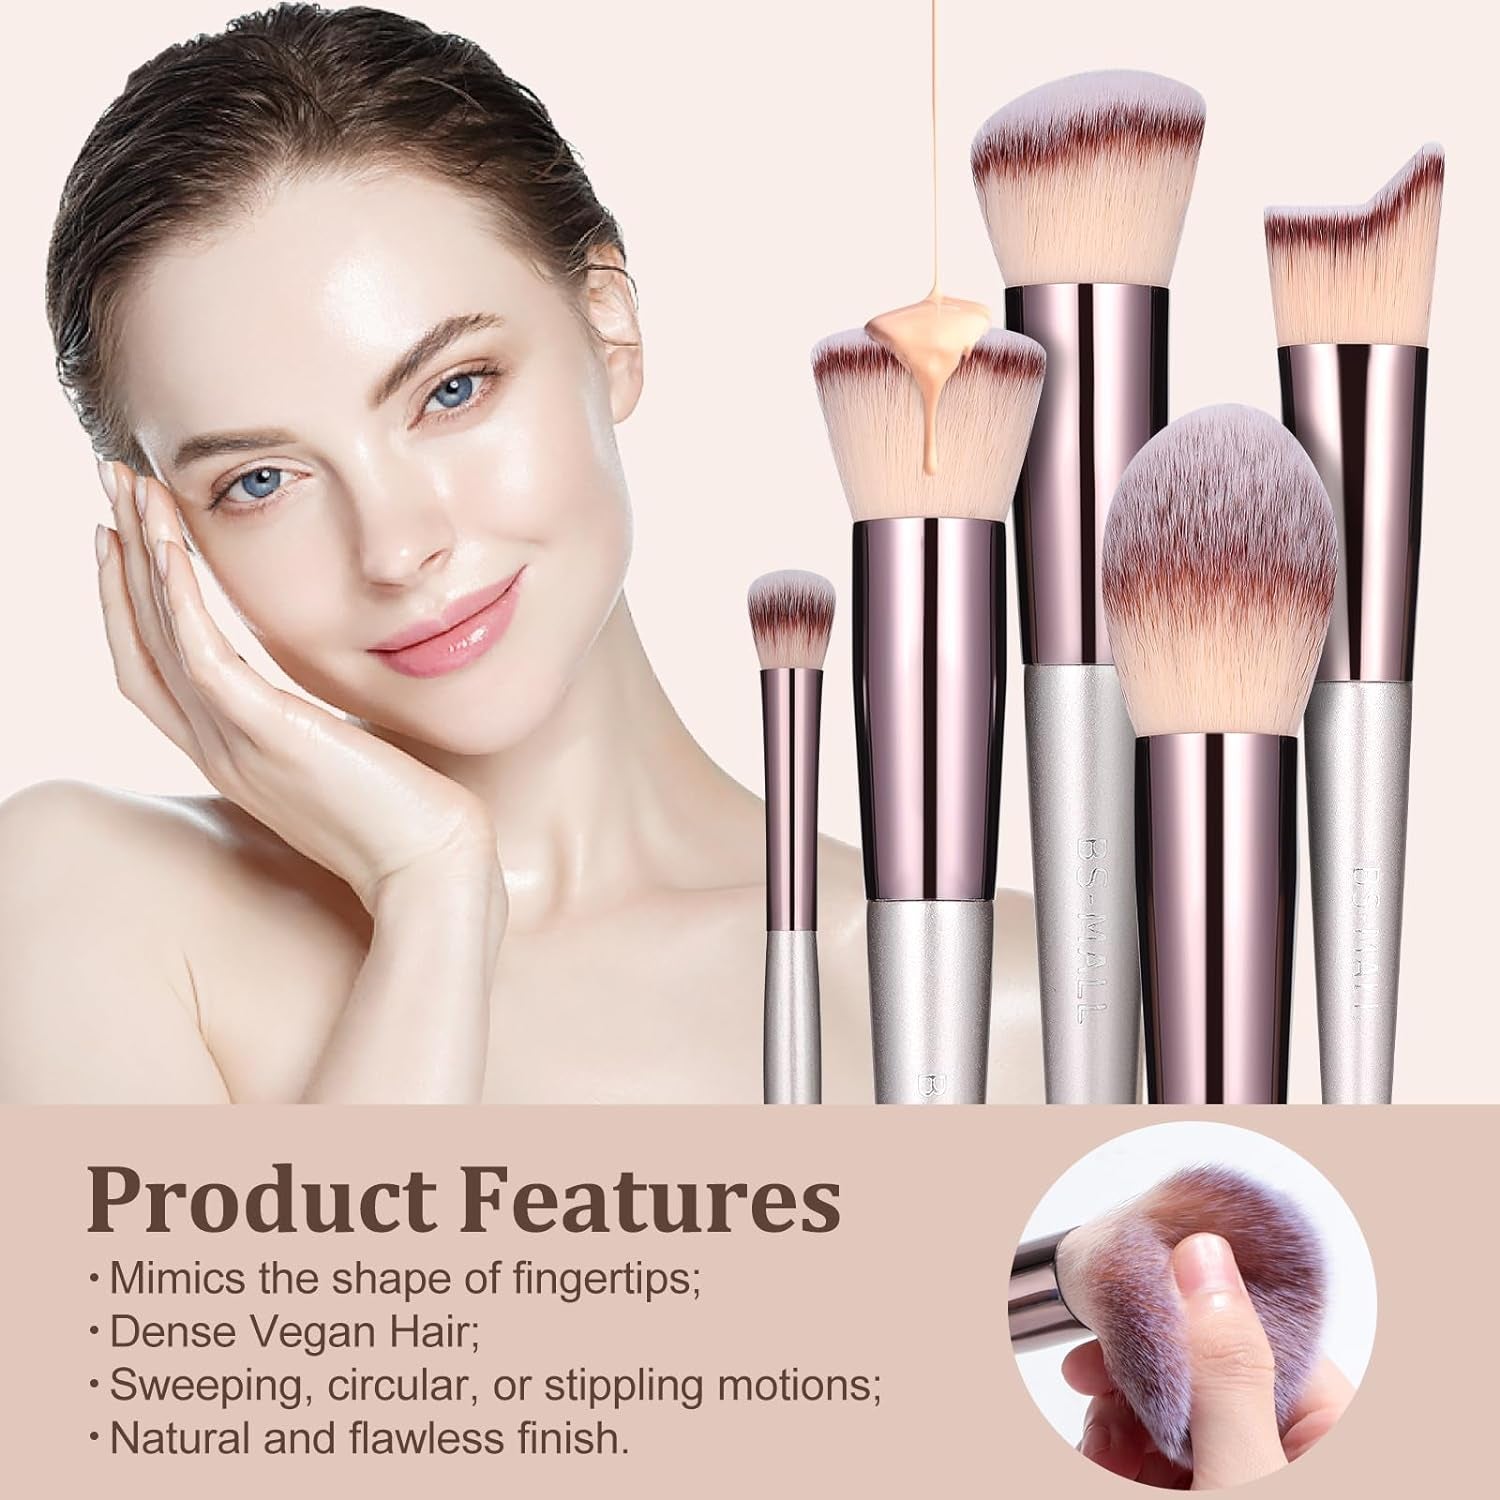 Makeup Brush Set 18 Pcs Premium Synthetic Foundation Powder Concealers Eye Shadows Blush Makeup Brushes with Black Case